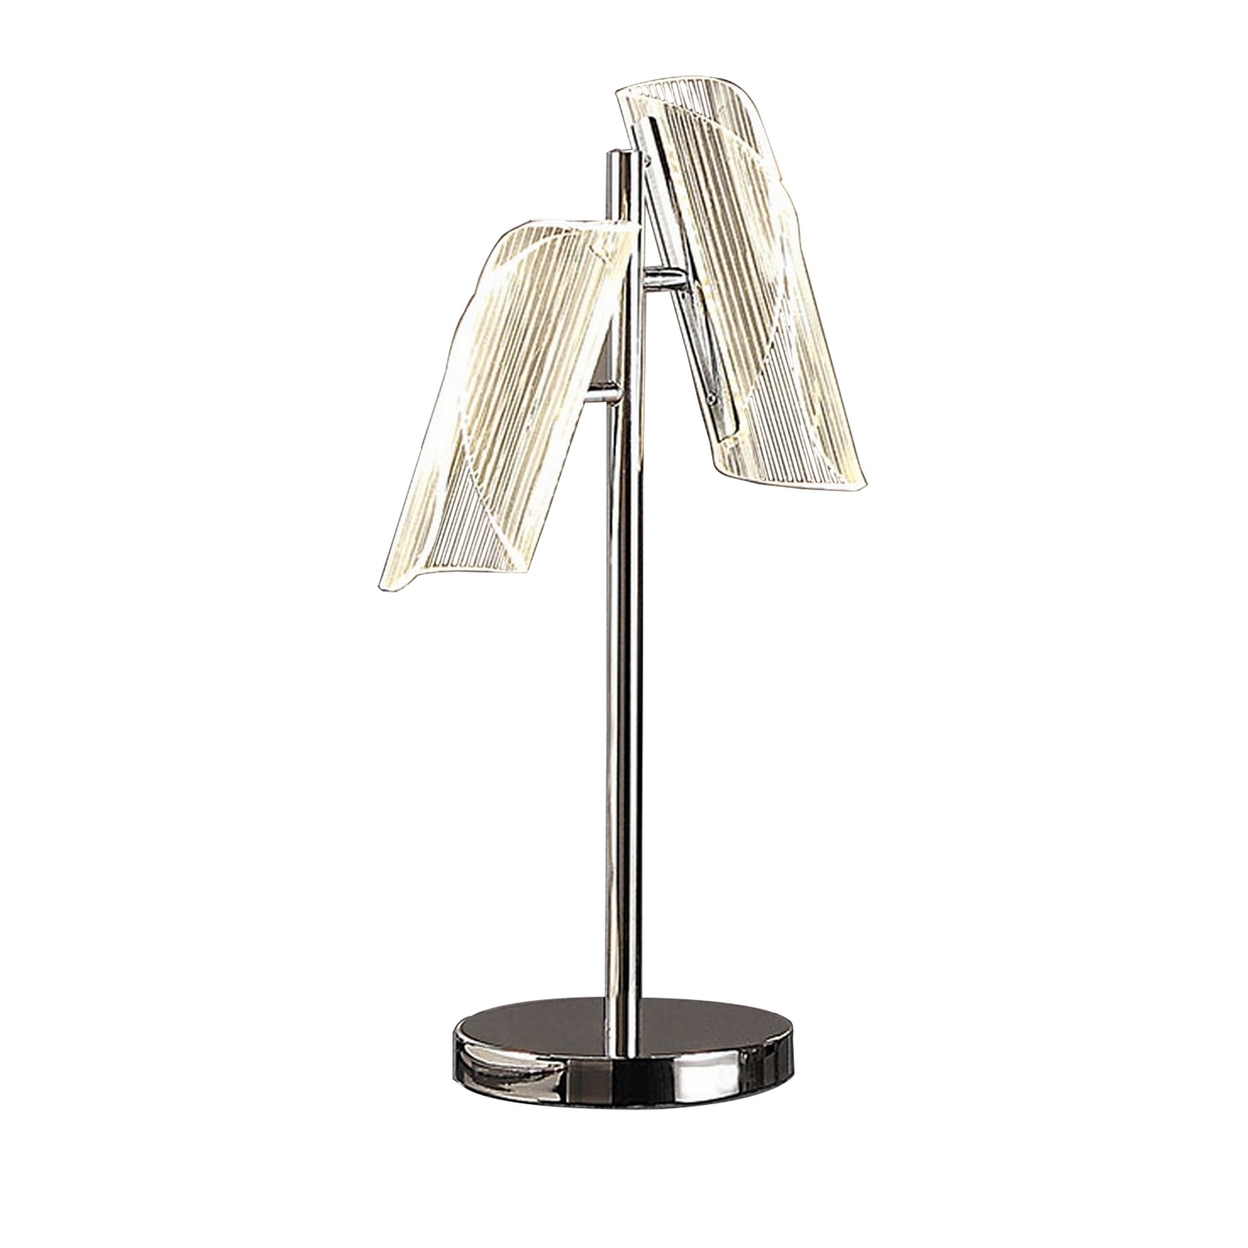 Spark 23 Inch Table Lamp, 2 Cylindrical Shades, Bright Nickel Silver Finish -Saltoro Sherpi